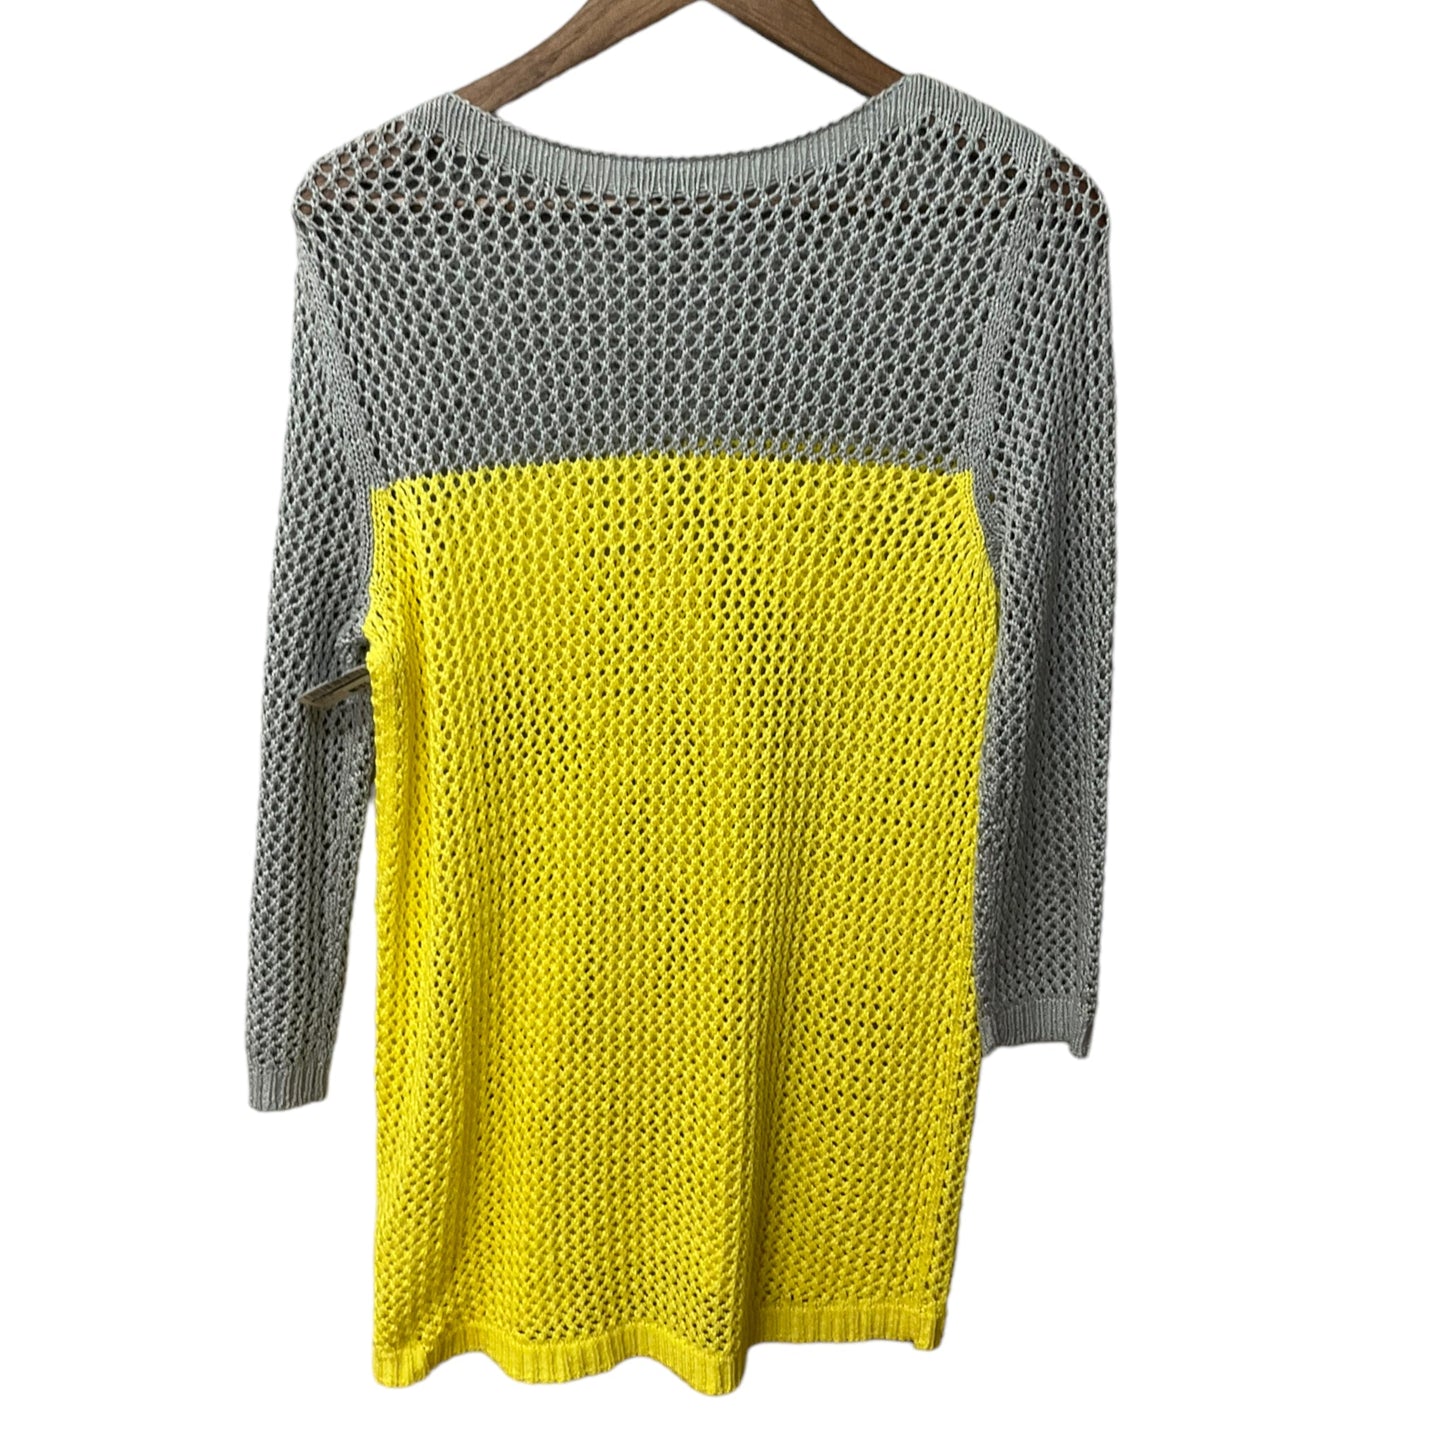 Sweater By Apt 9  Size: M